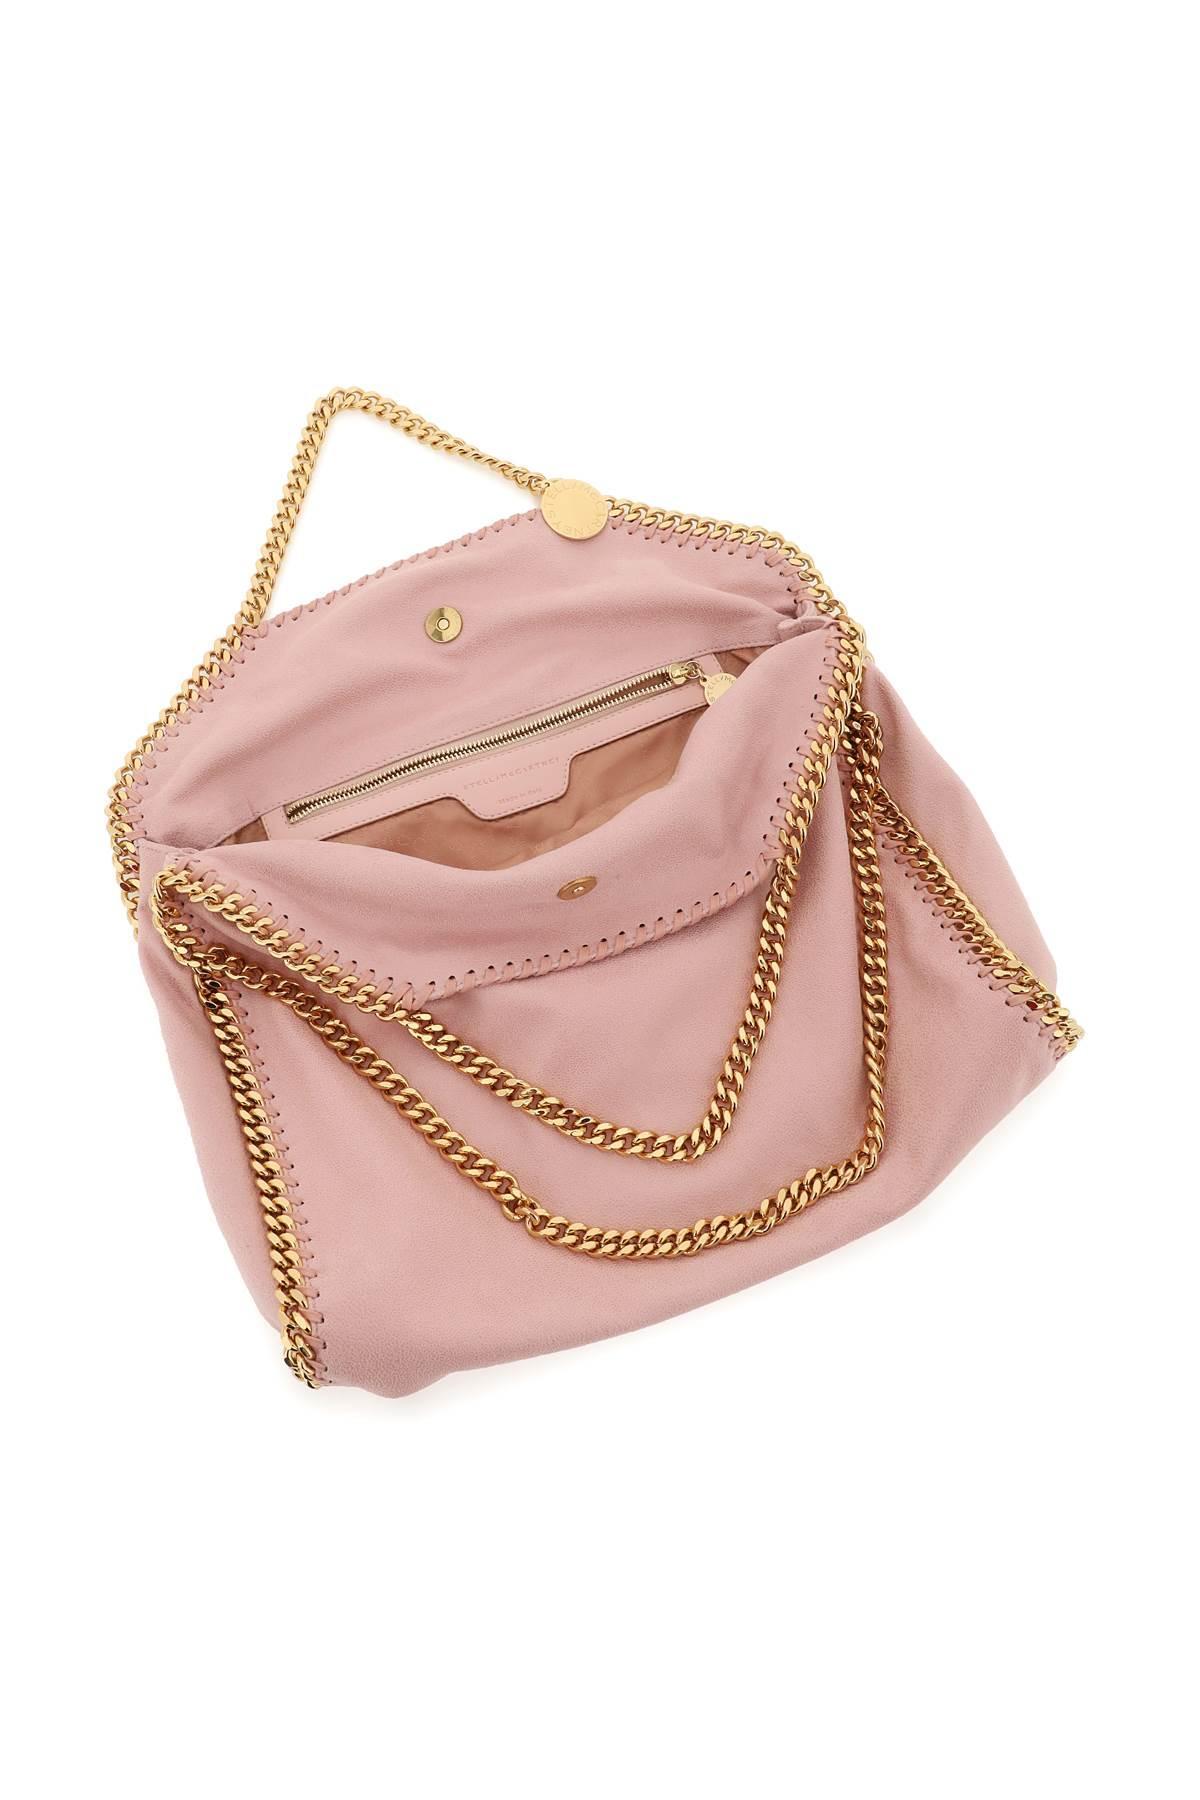 Stella McCartney 3chain Falabella Tote Bag in Pink | Lyst